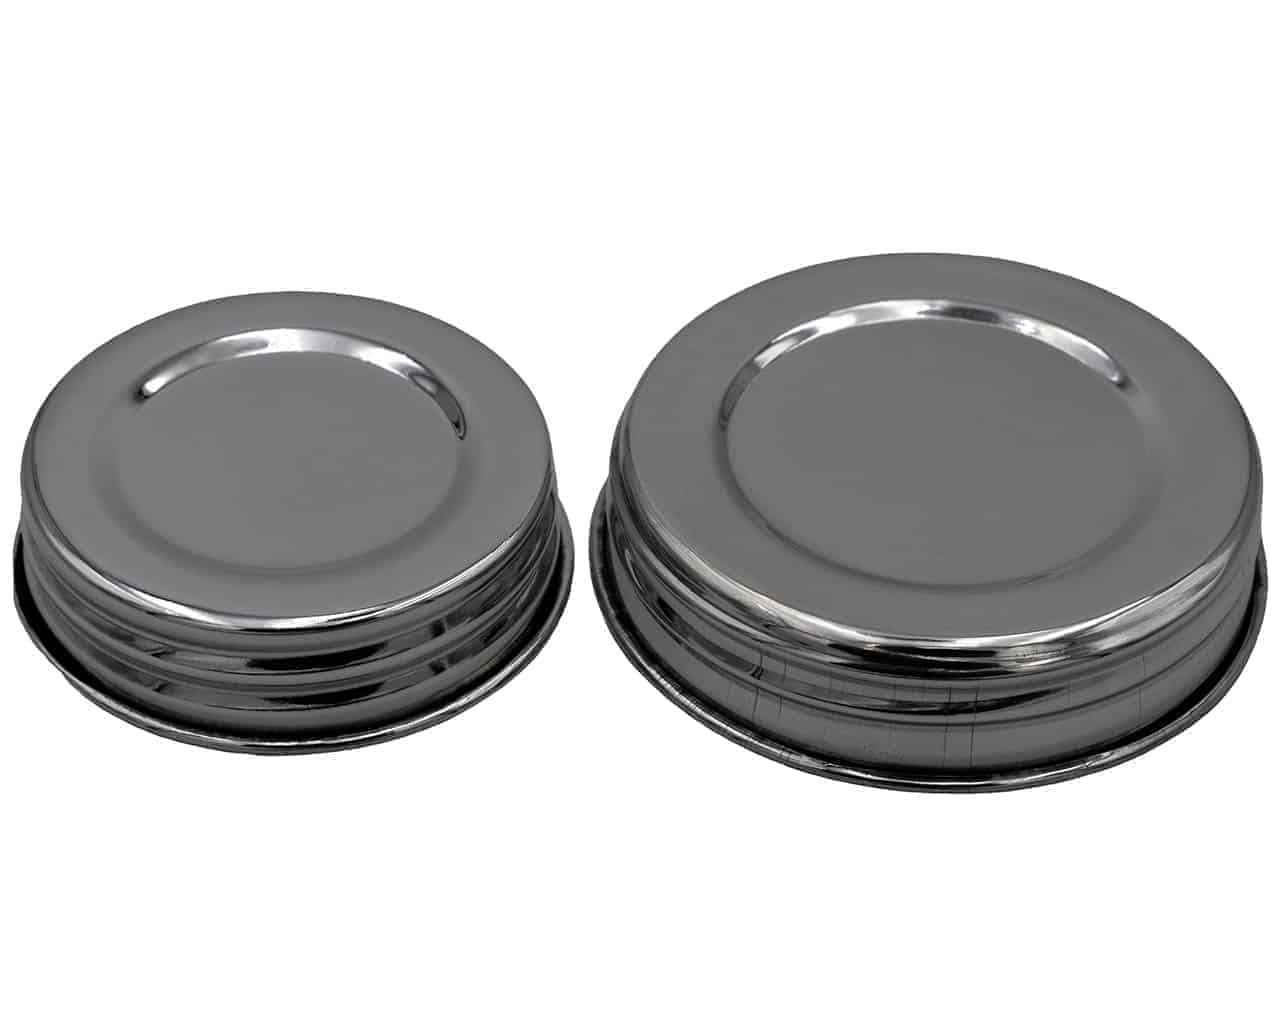 mason-jar-lifestyle-chrome-mirror-shiny-polished-stainless-steel-vintage-reproduction-storage-lids-regular-wide-mouth-mason-jars